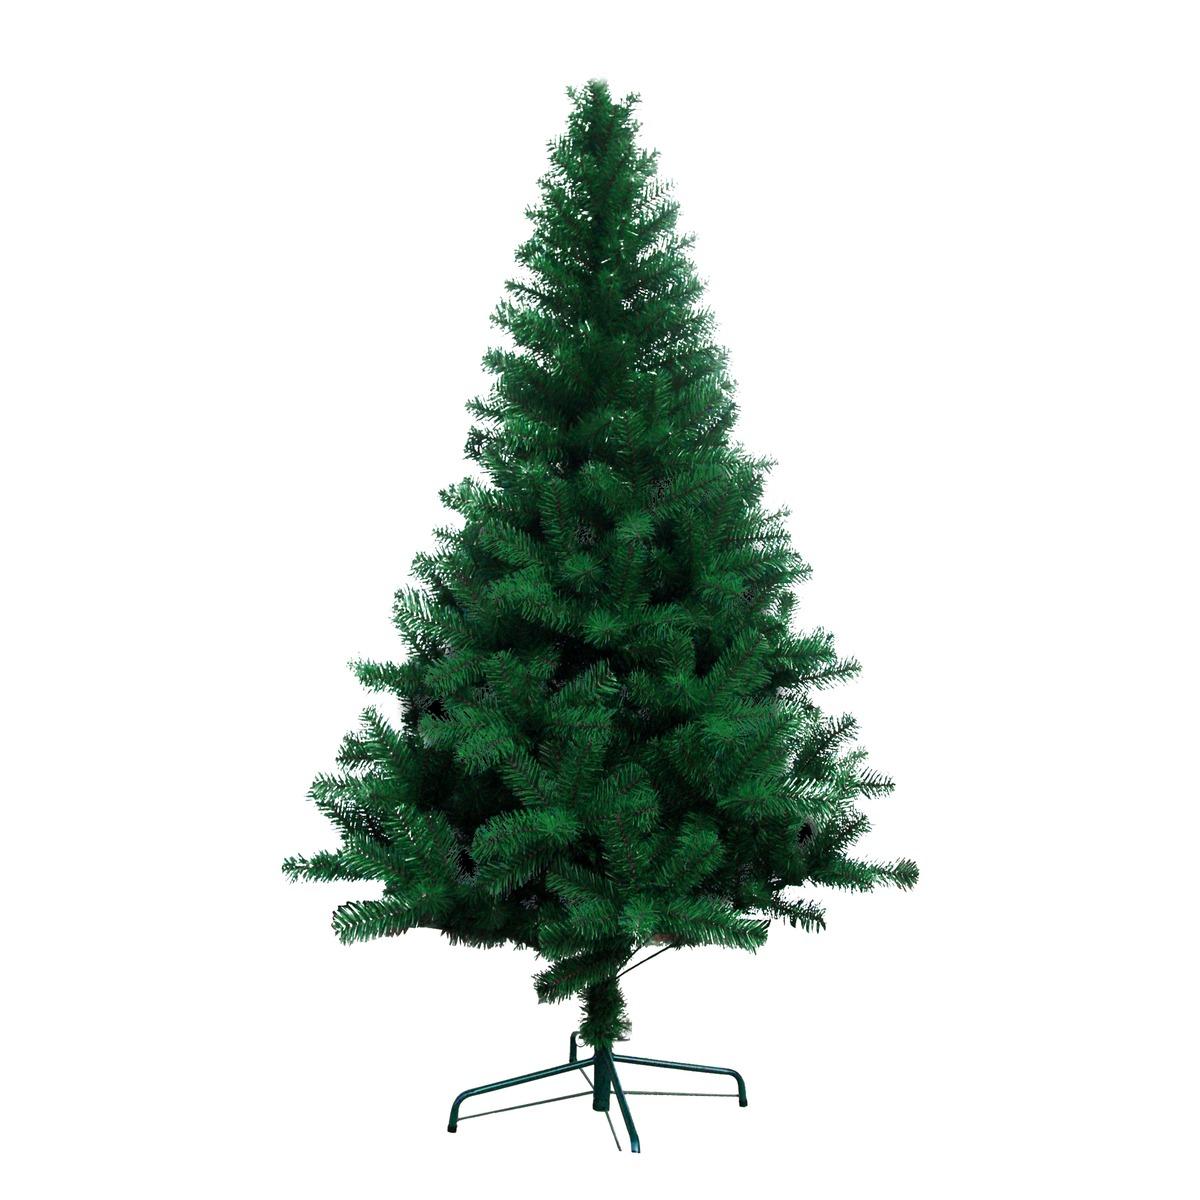 Sapin de Noël en plastique - Hauteur 150 cm - Vert